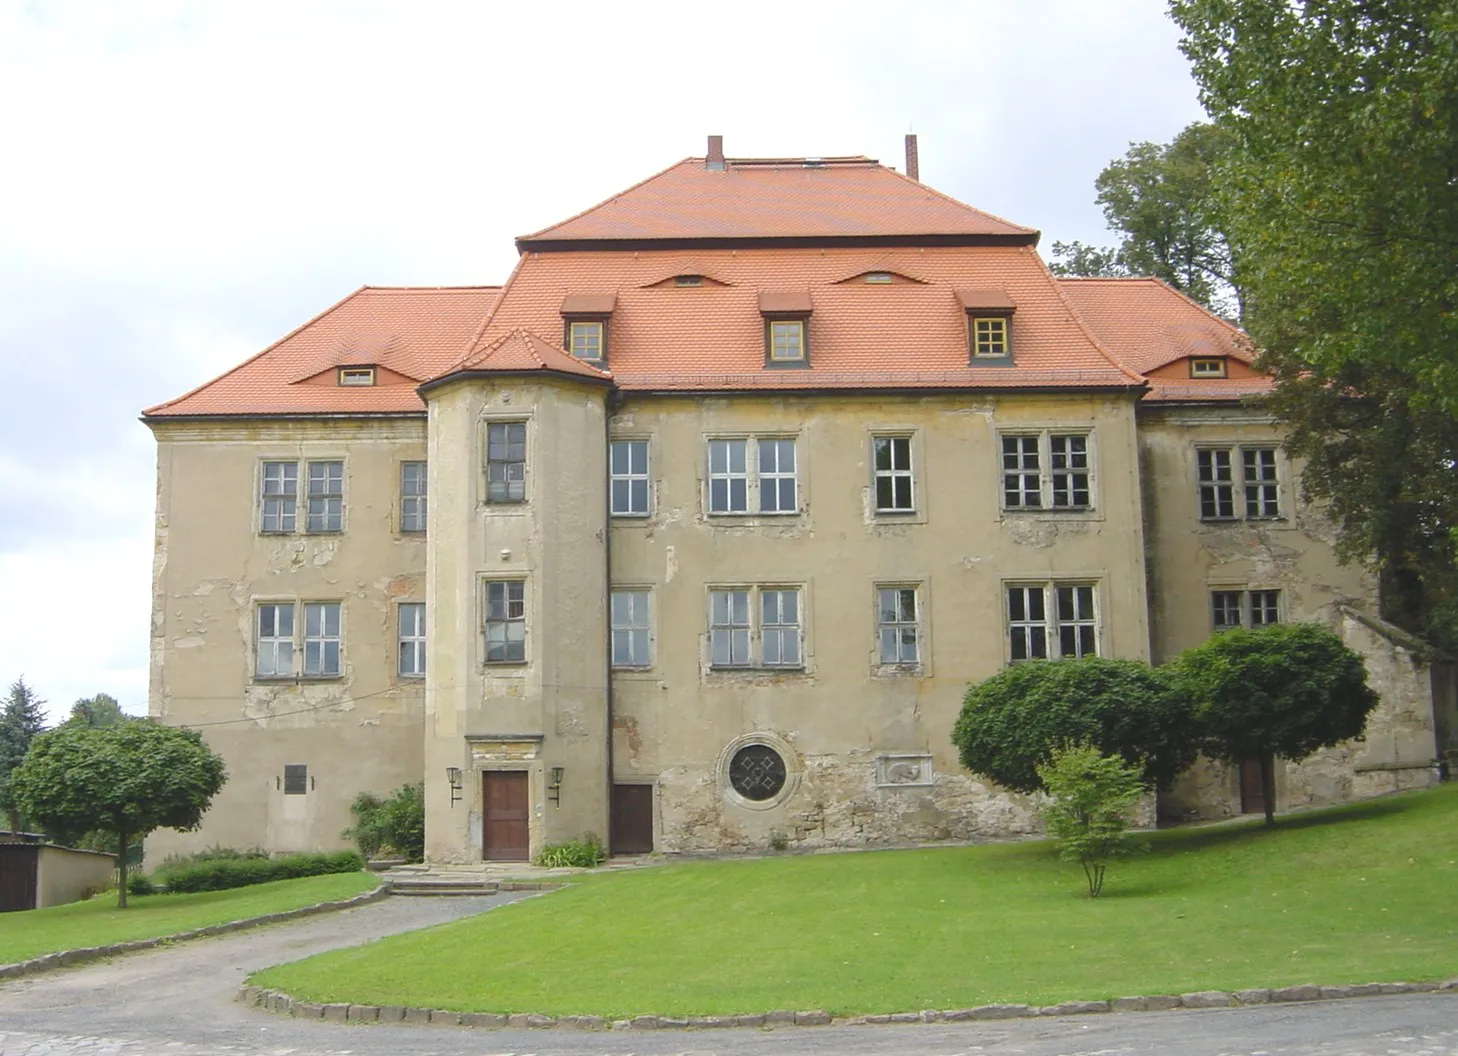 Photo showing: Castle in Struppen, Saxony, Germany